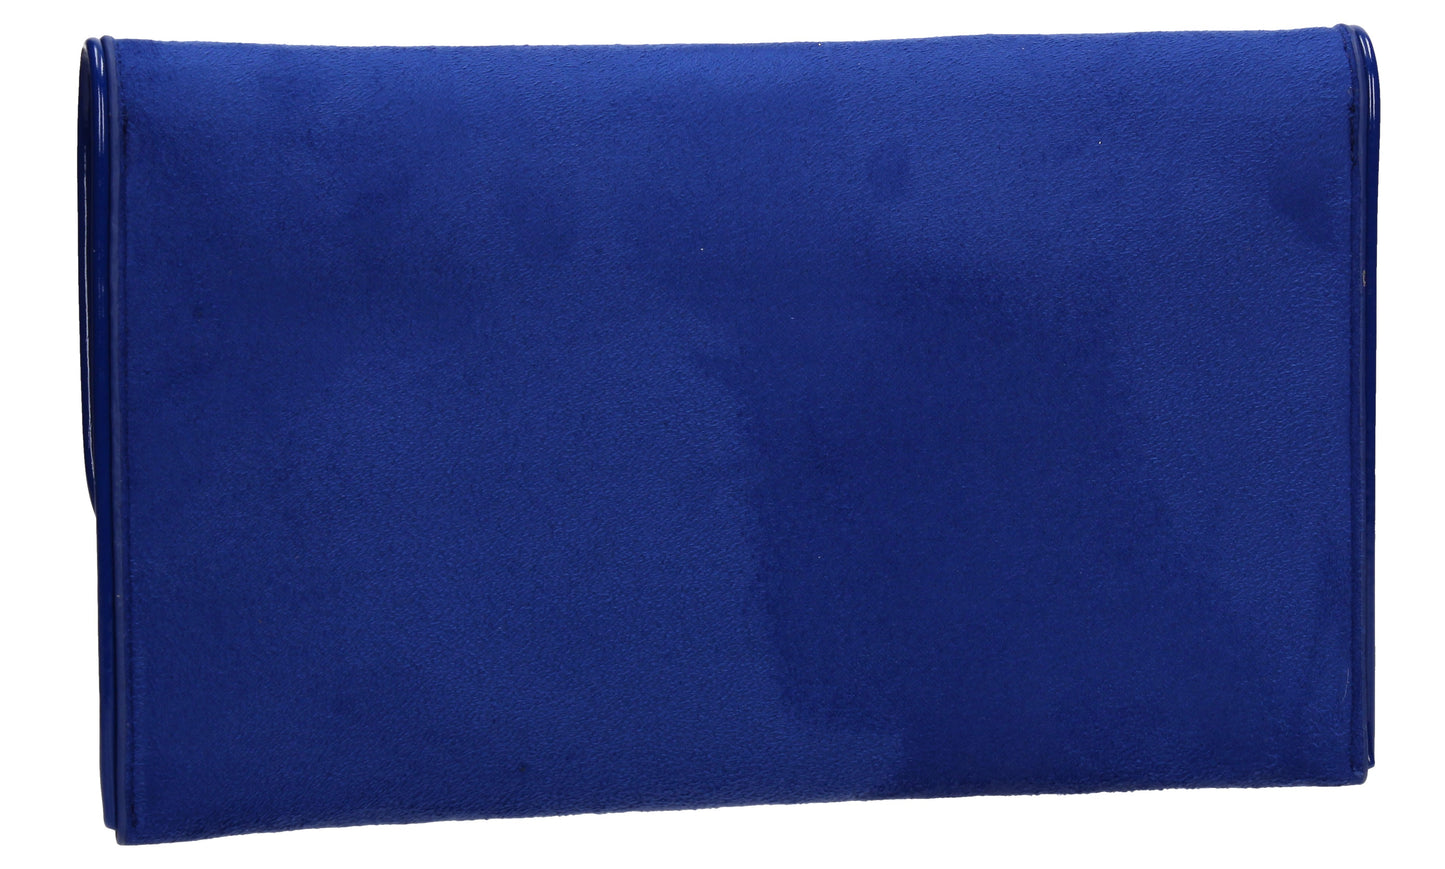 SWANKYSWANS Kora Clutch Bag Royal Blue Cute Cheap Clutch Bag For Weddings School and Work